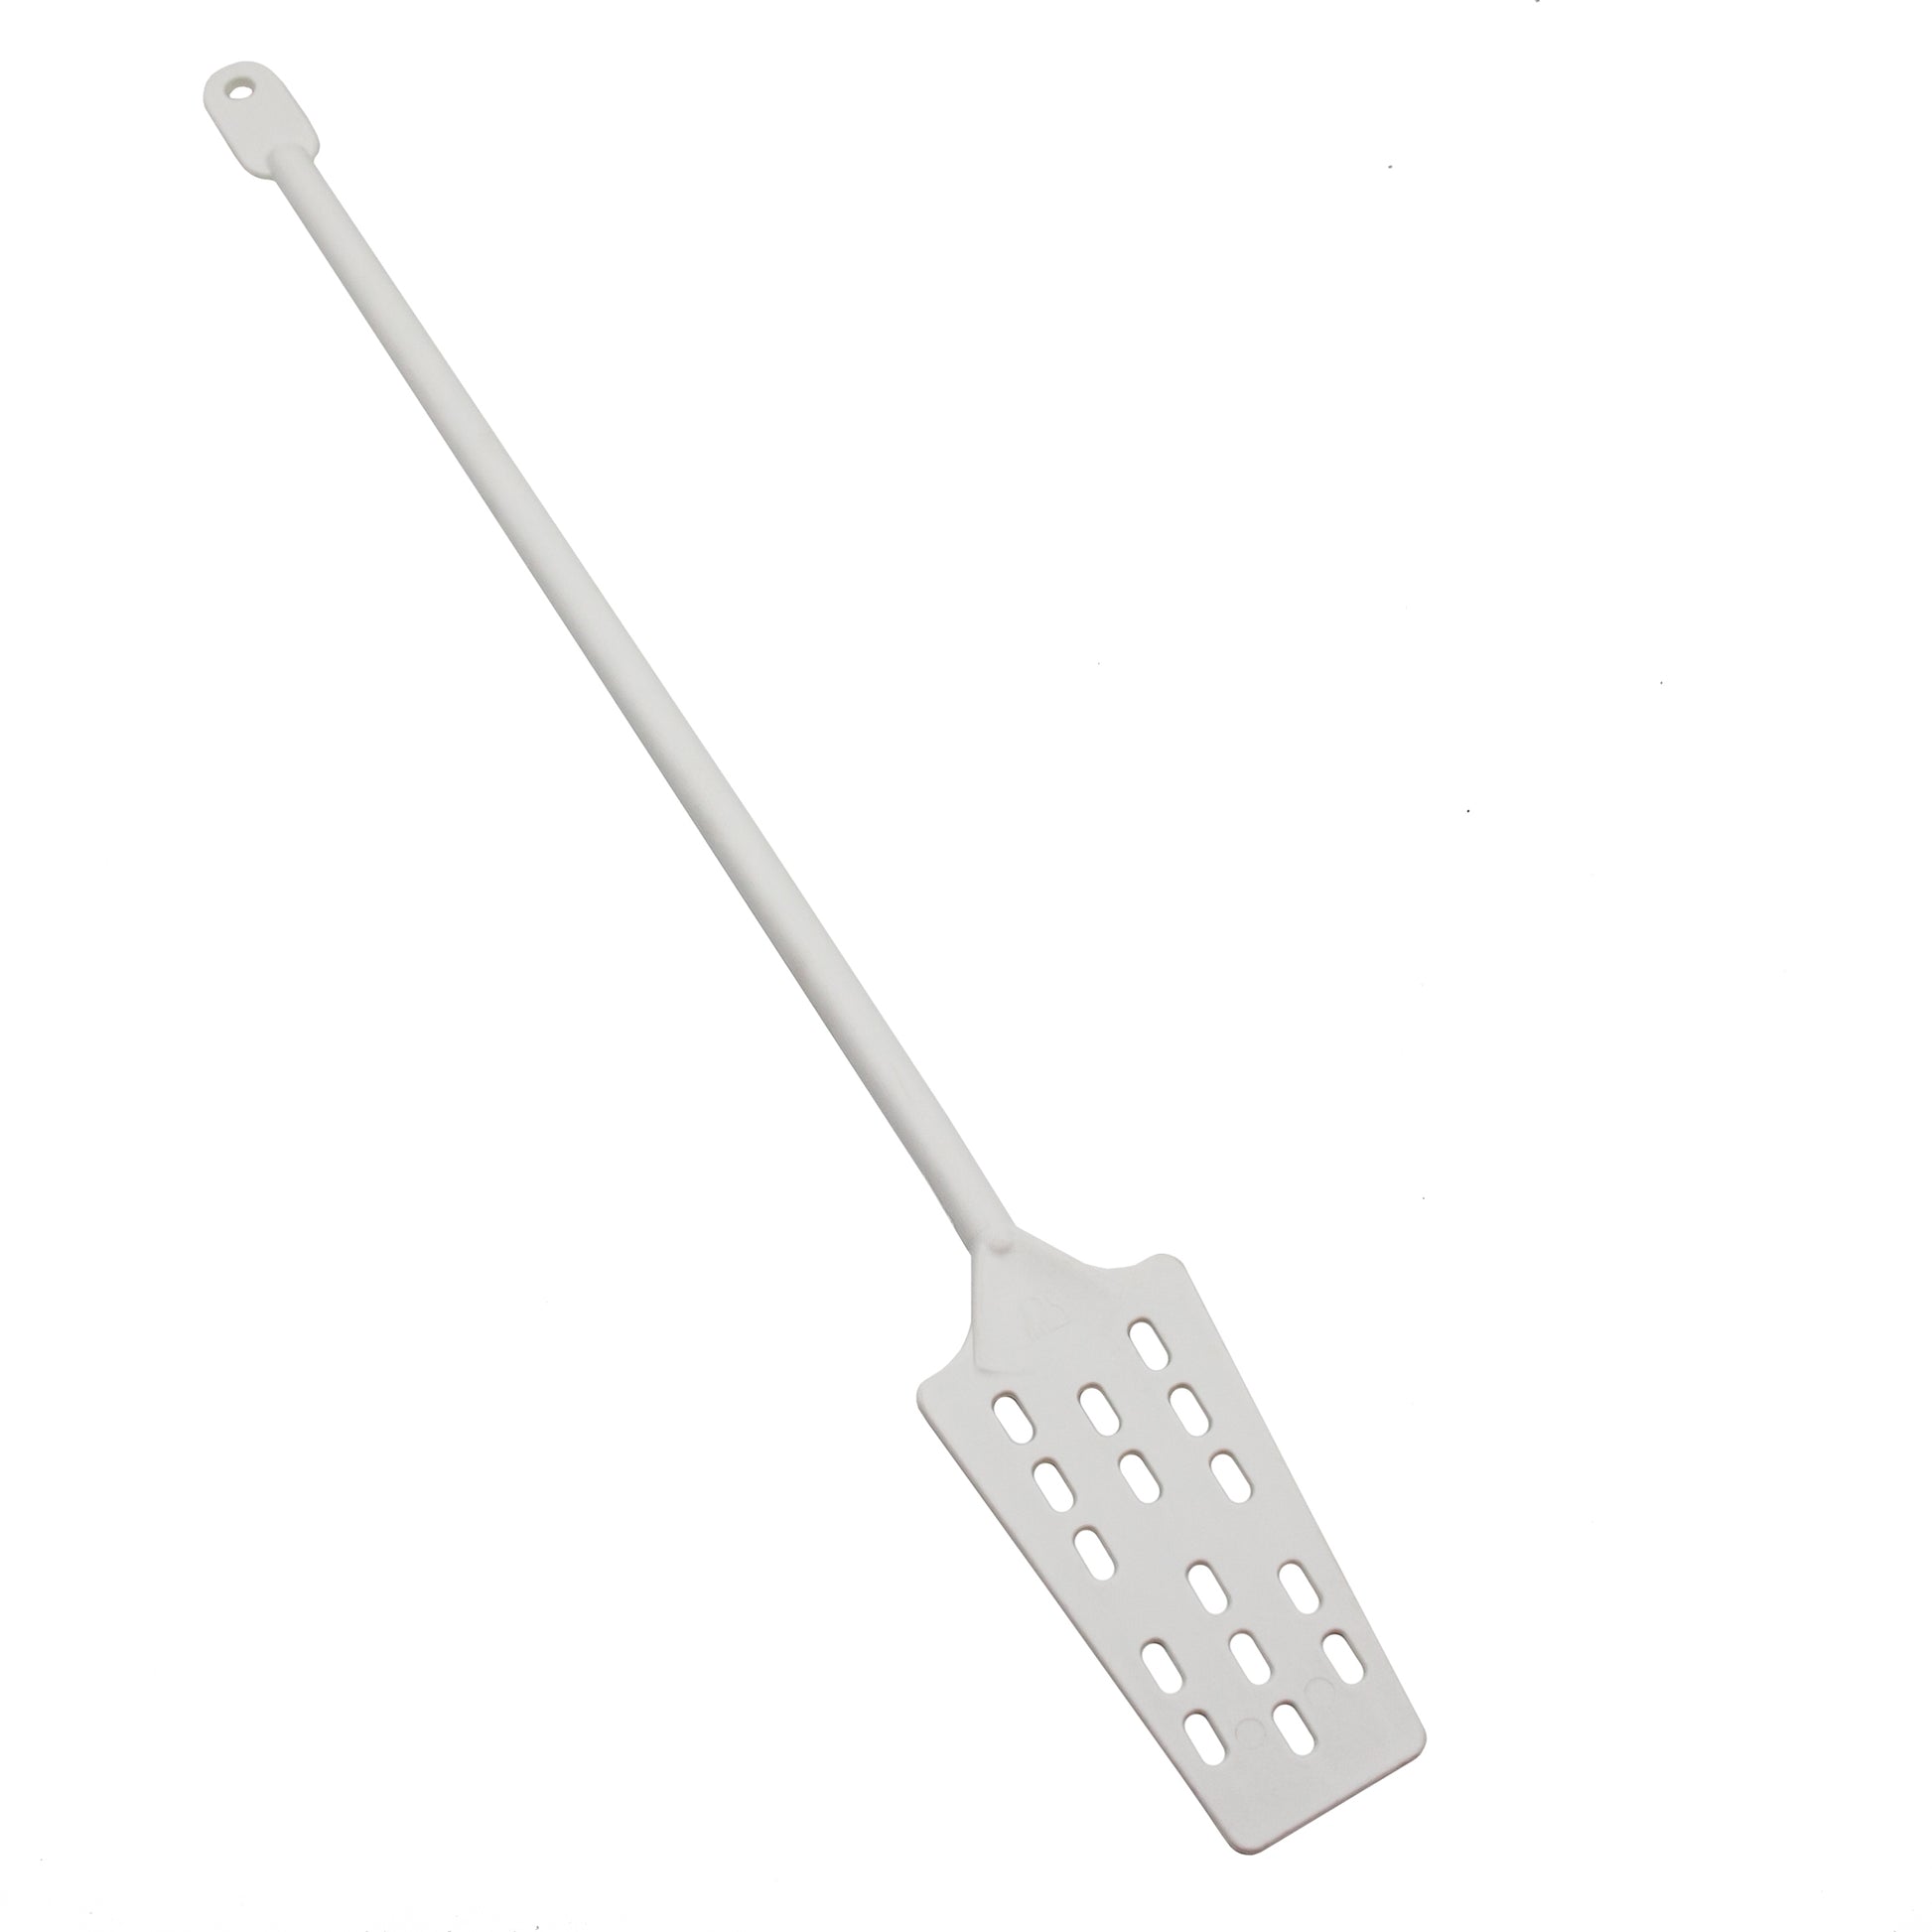 60cm white food grade plastic paddle